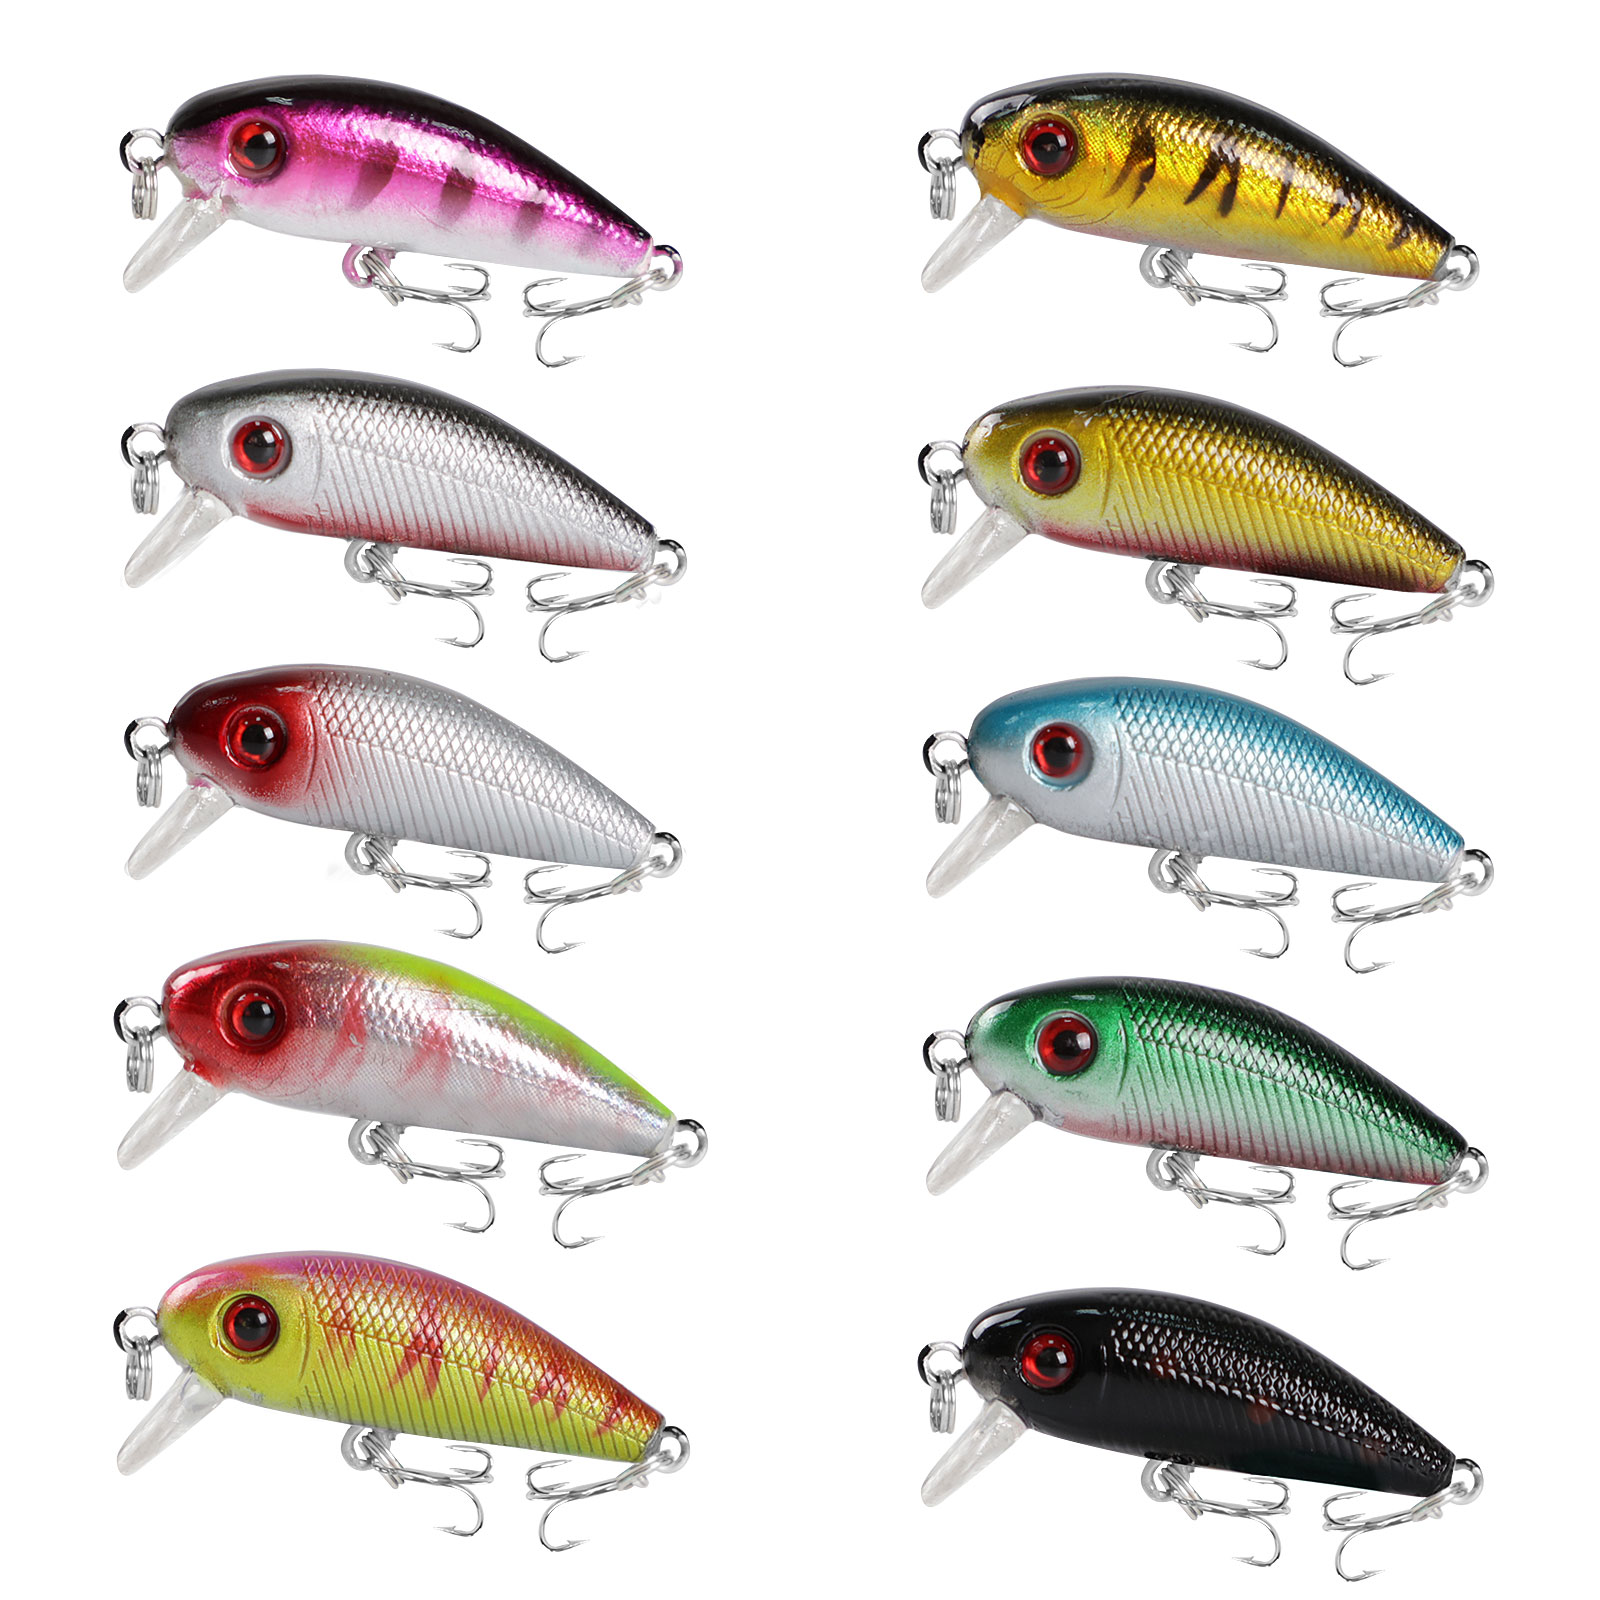 FREE FISHER Wholesale 100pcs Mixed Colors Fishing Hard Baits Mini Minnows 4.5cm/3g Artificial Floating Lures Wobbler Trout Topwater Crankbait 